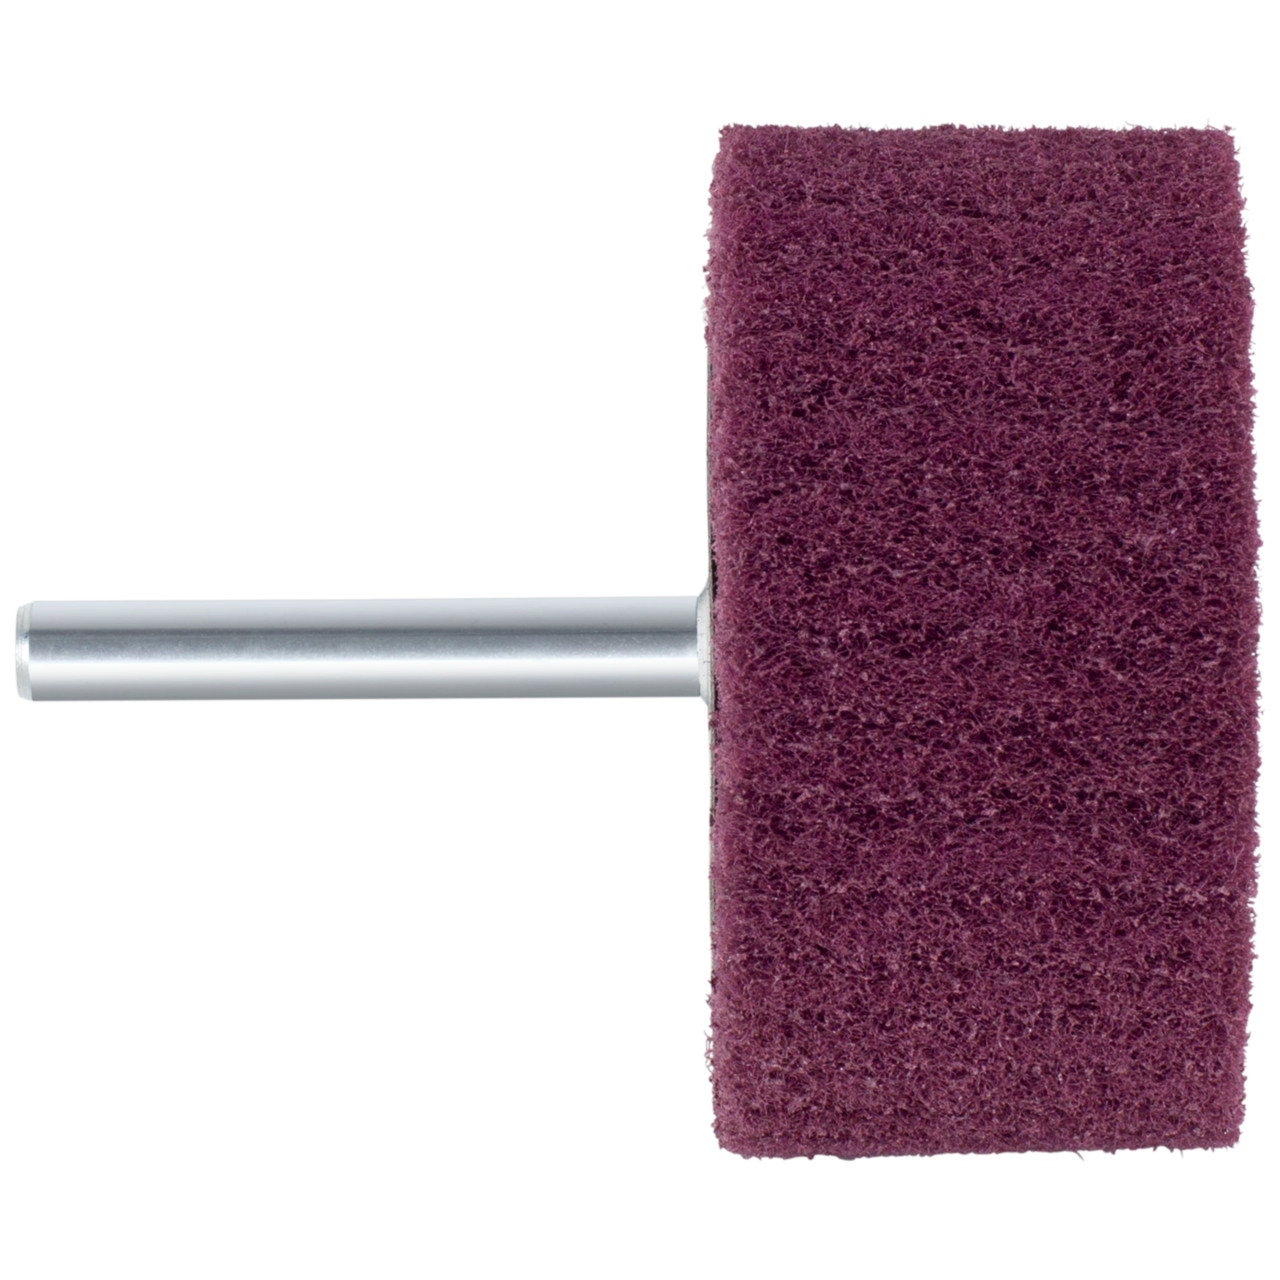 TYROLIT fleece pins DxT 80x50 For steel, stainless steel and non-ferrous metals, A VERY FINE, shape: 52LA, Art. 908796